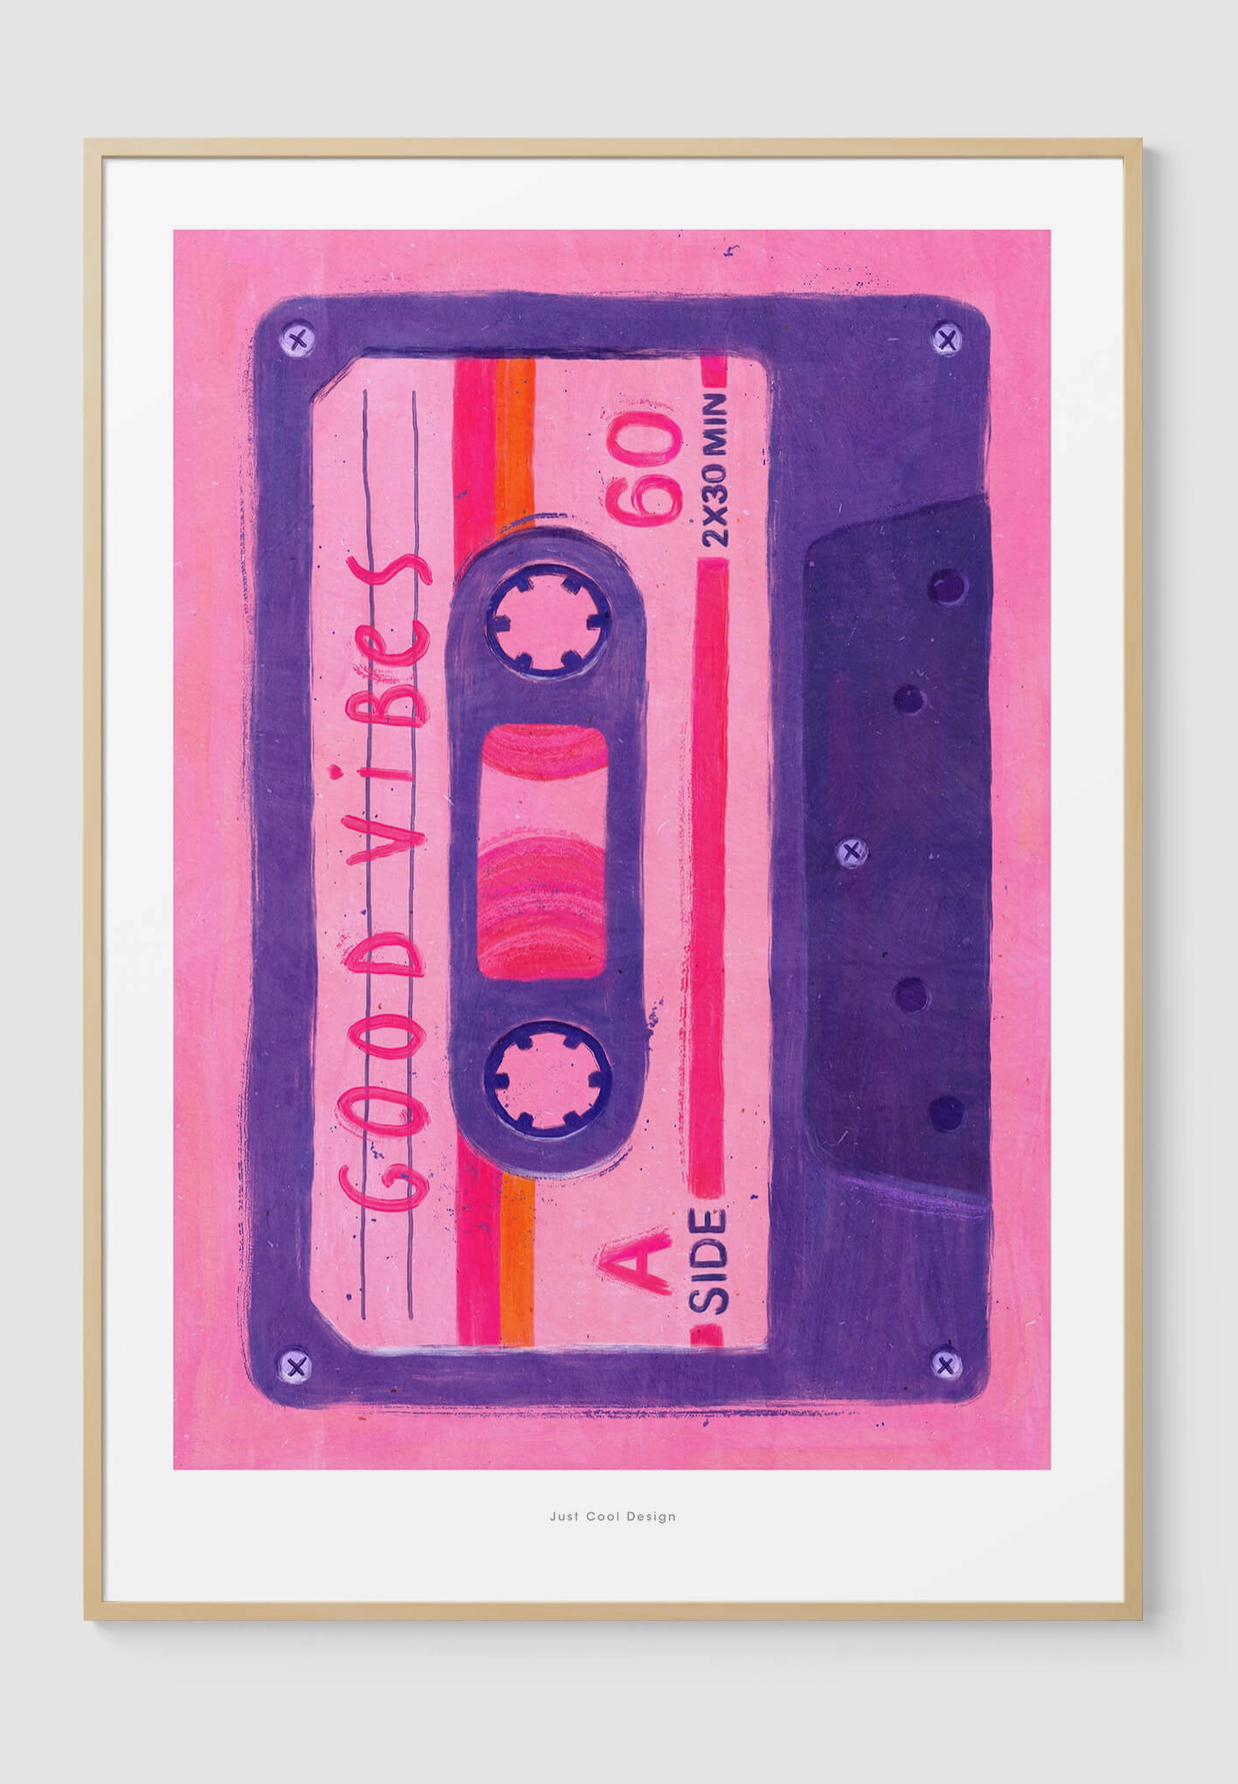 We Should Stick Together Cute Tape Pun Canvas Print / Canvas Art